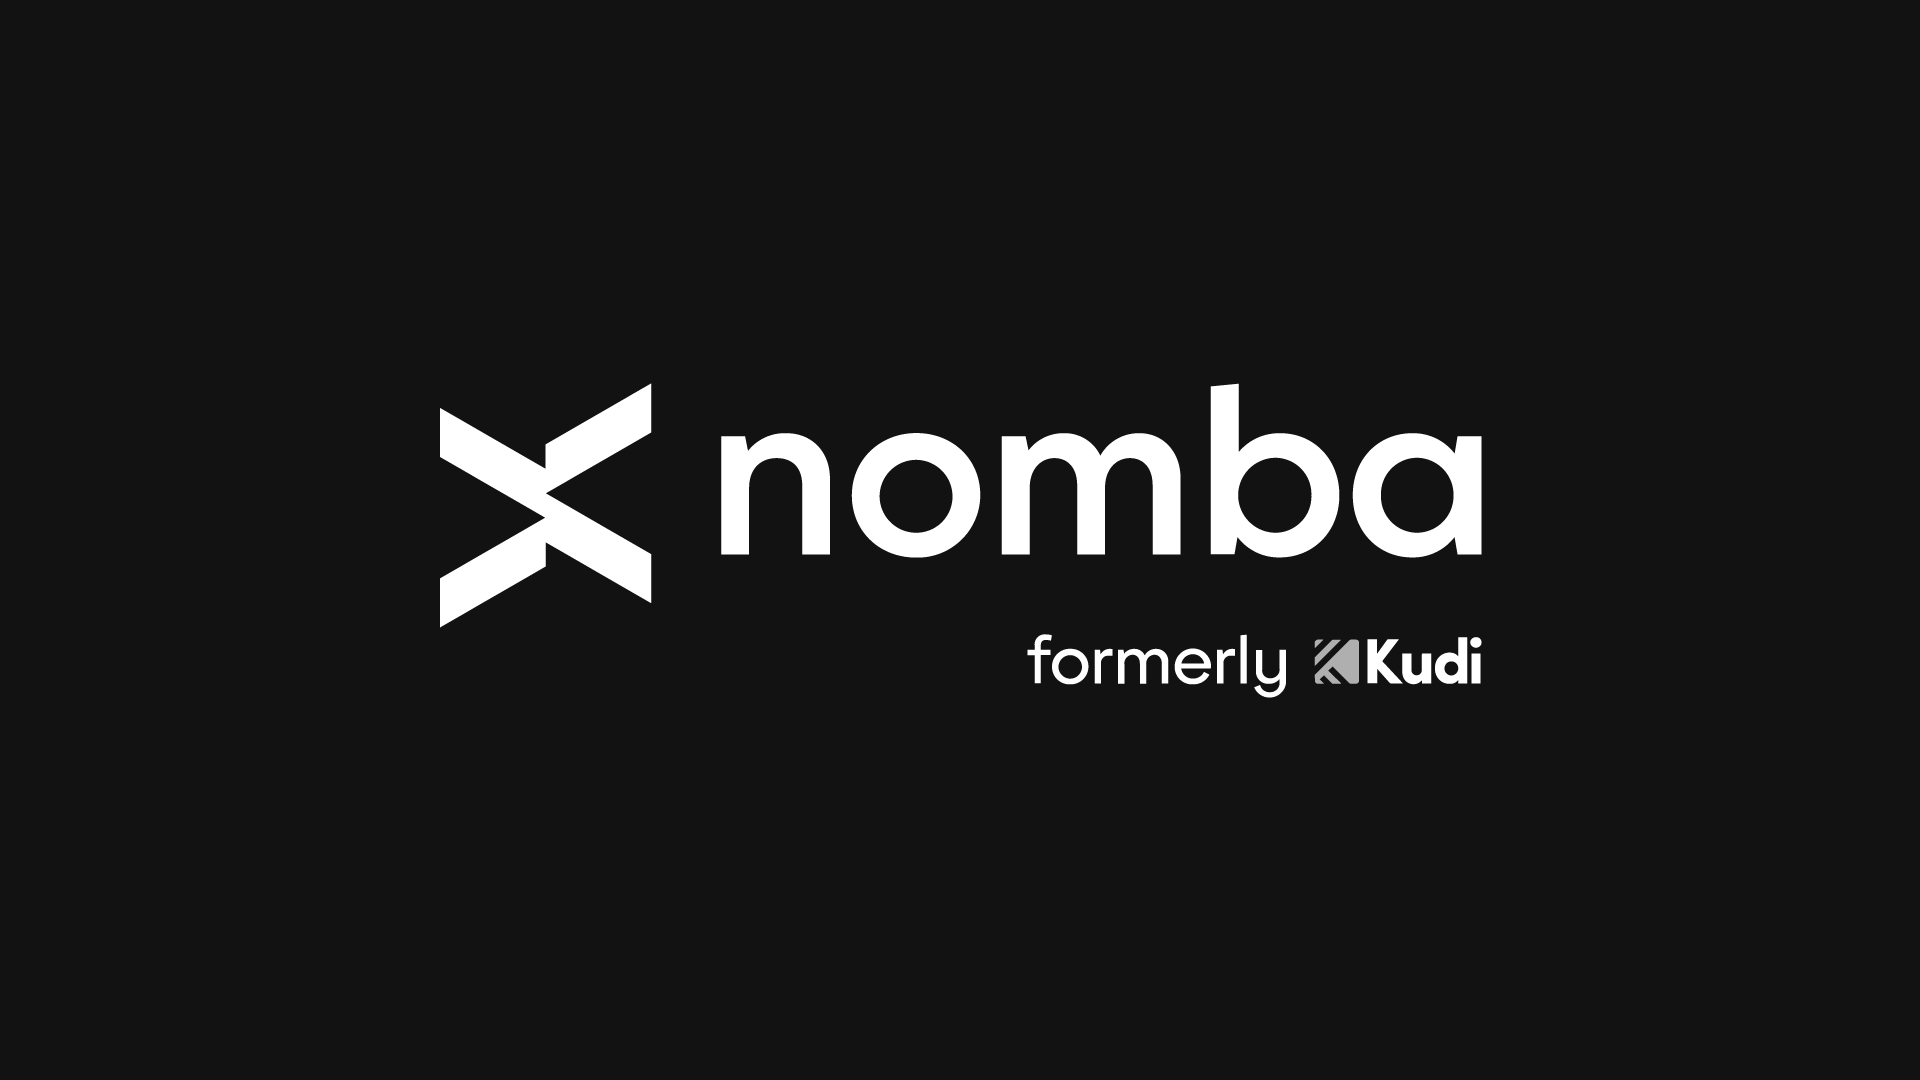 02_-_Nomba-logo-on-black-bg-fourthcanvas_rj01fi